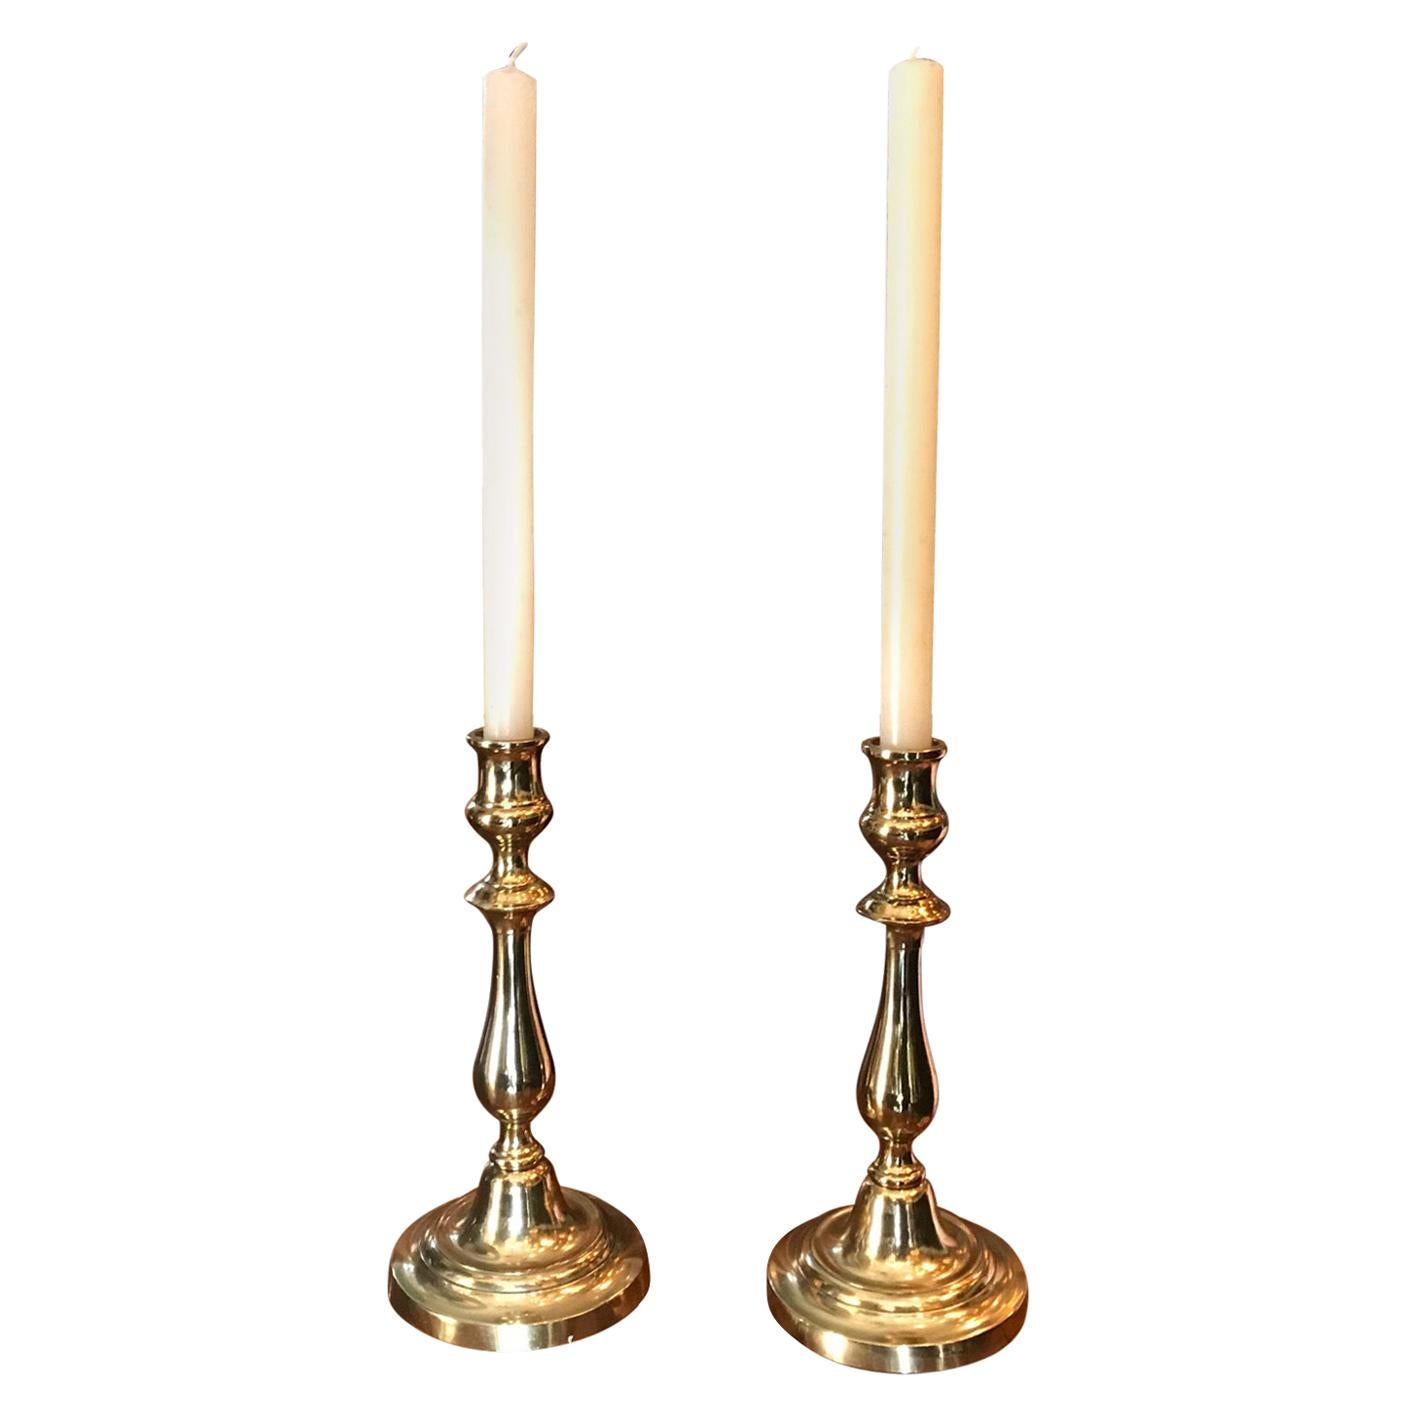 Pair Candlesticks Candleholder Light in Brass Antique Object Decorative Accent